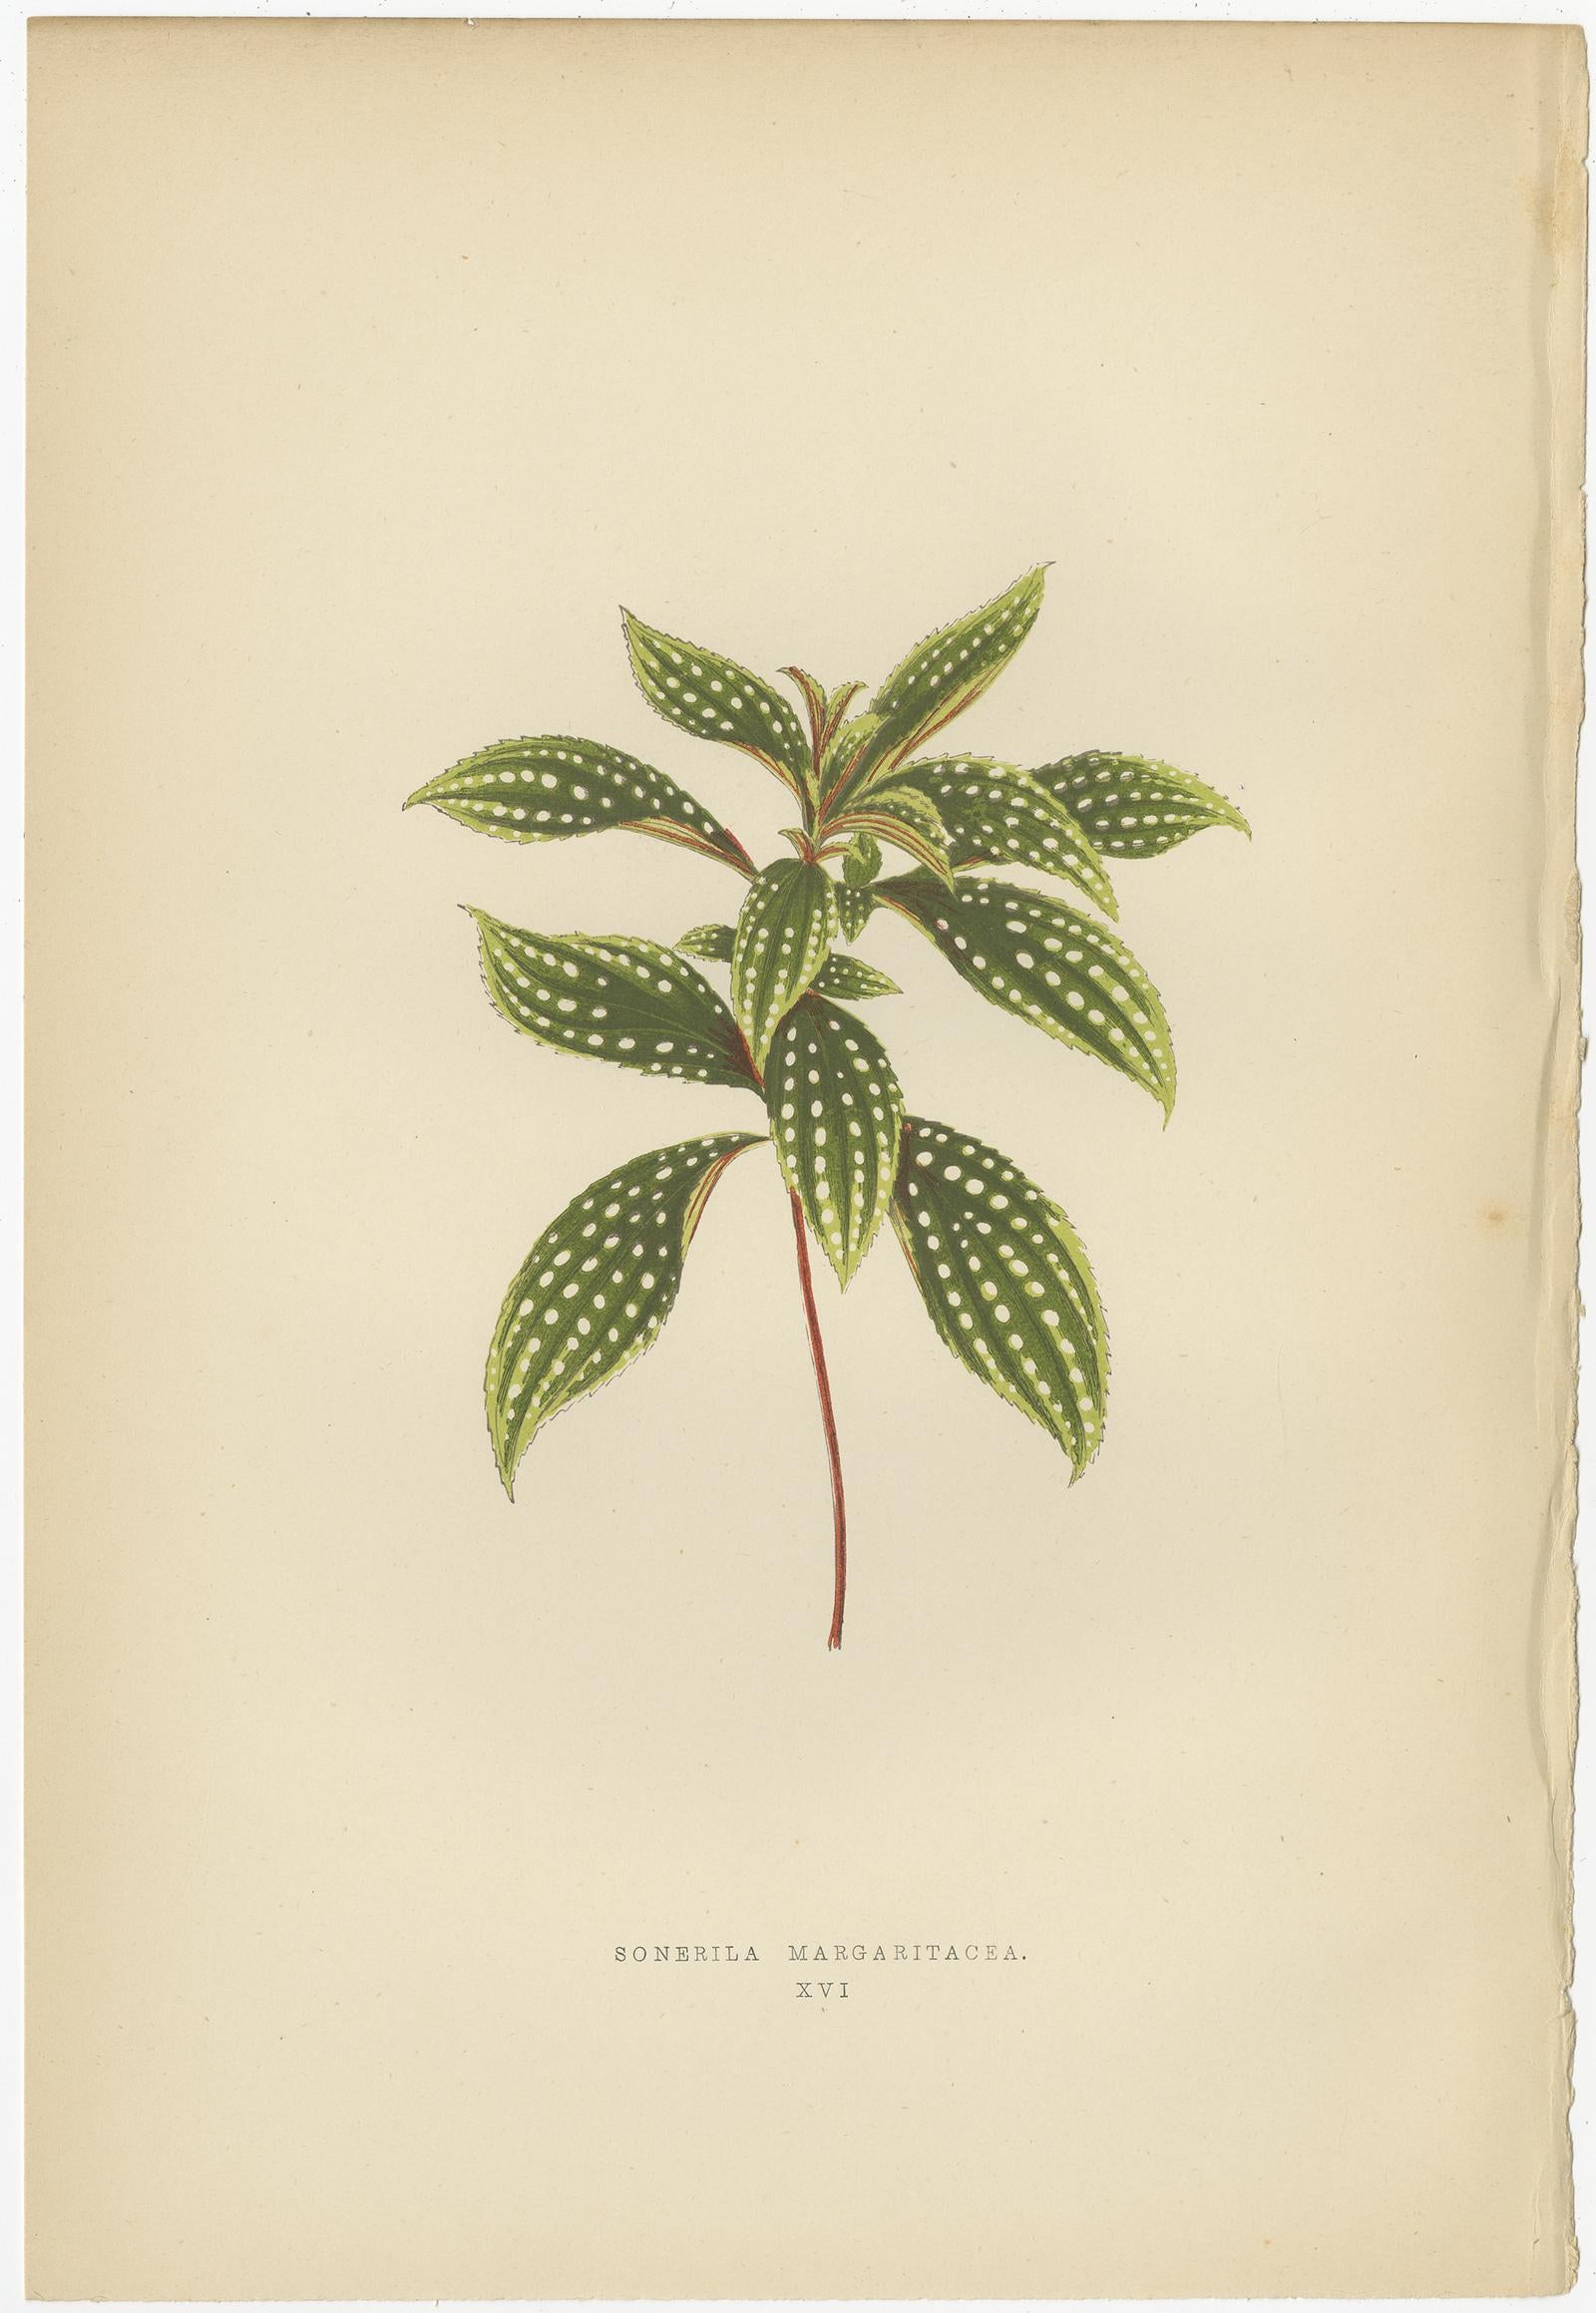 Set of 6 Botany Prints, Sonerila Margaritacea, Goodyera Rubro-Venia, 1891 For Sale 2